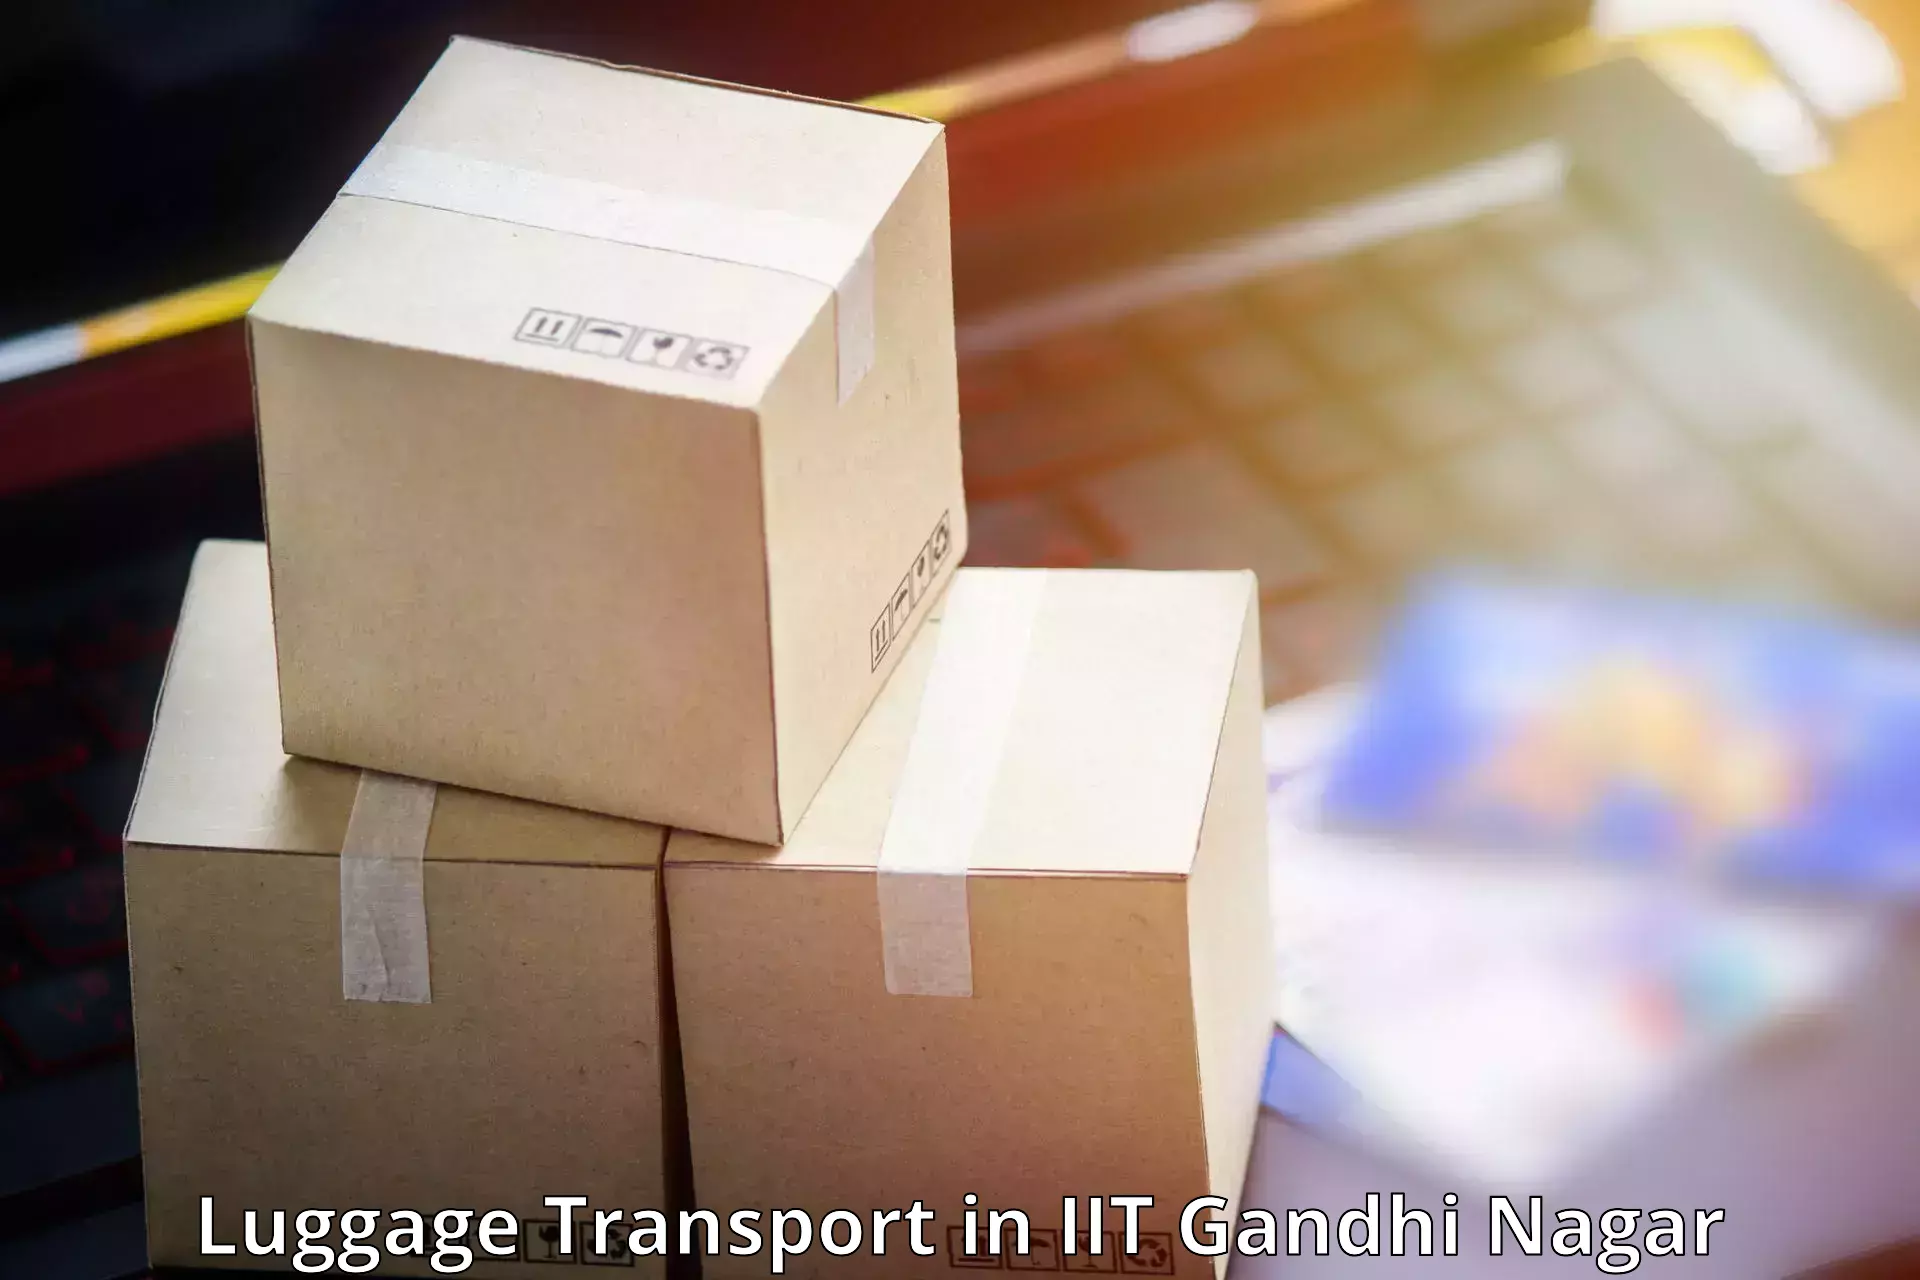 Luggage transport consulting in IIT Gandhi Nagar